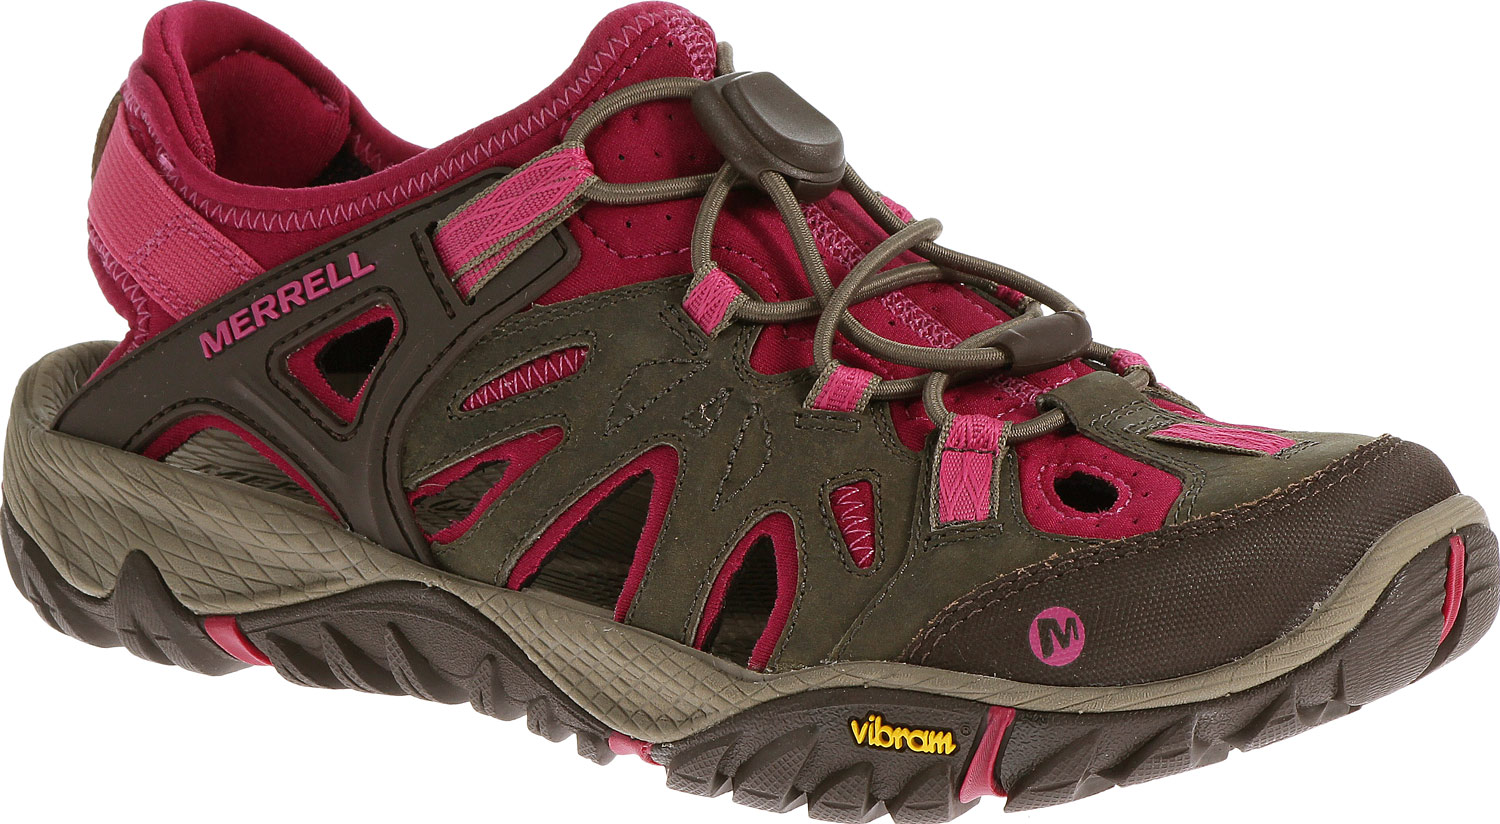 Women's hiking sandals